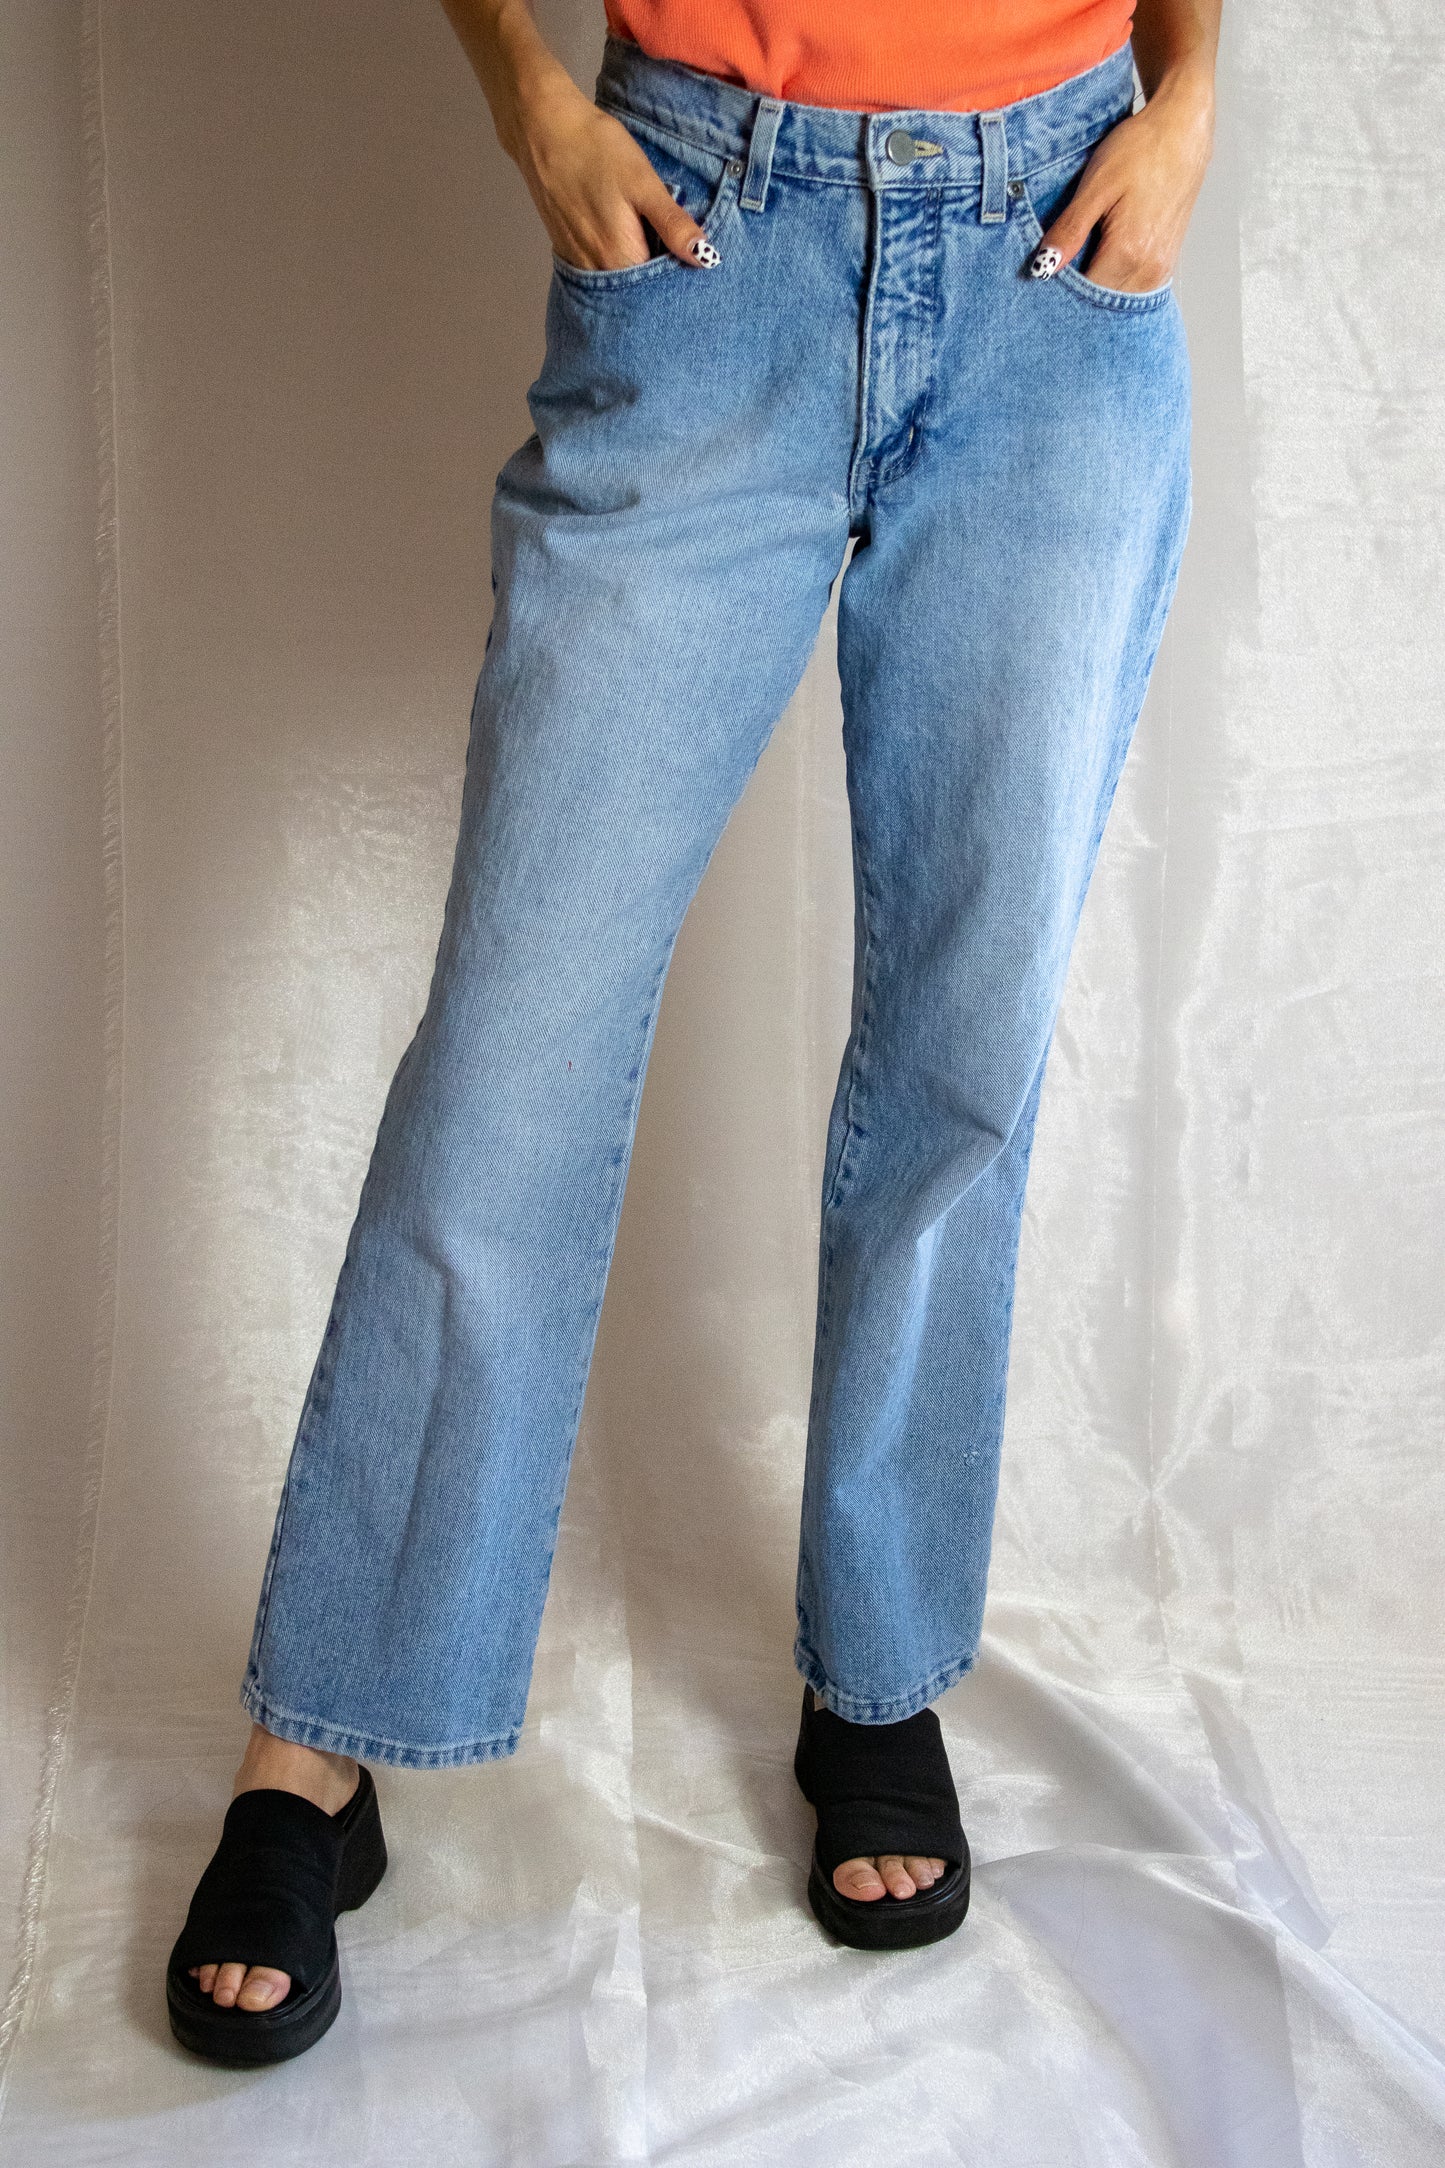 Light Wash Denim Jeans - 26x30